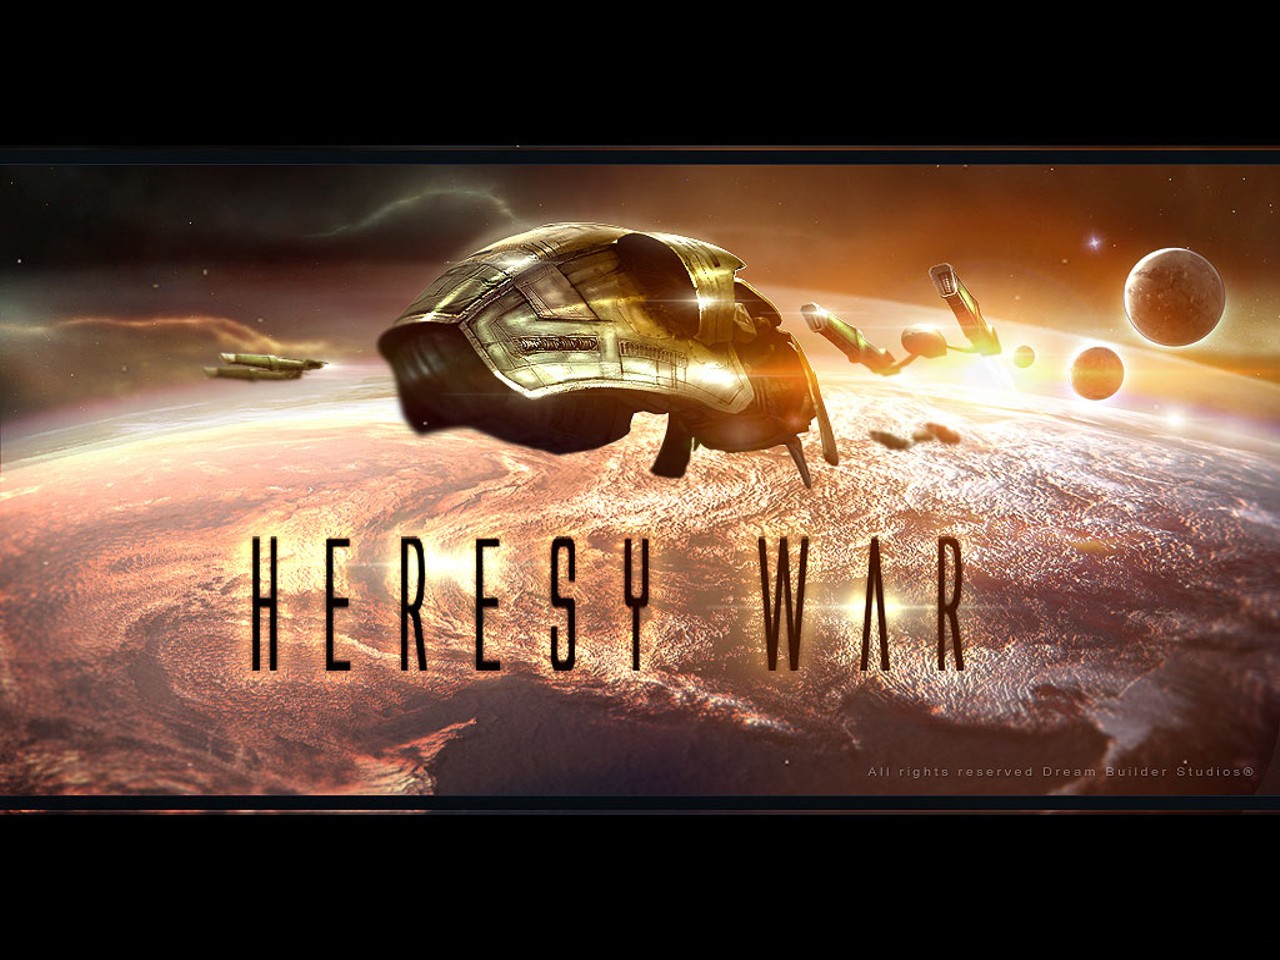 Download full size Heresy War wallpaper / Games / 1280x960